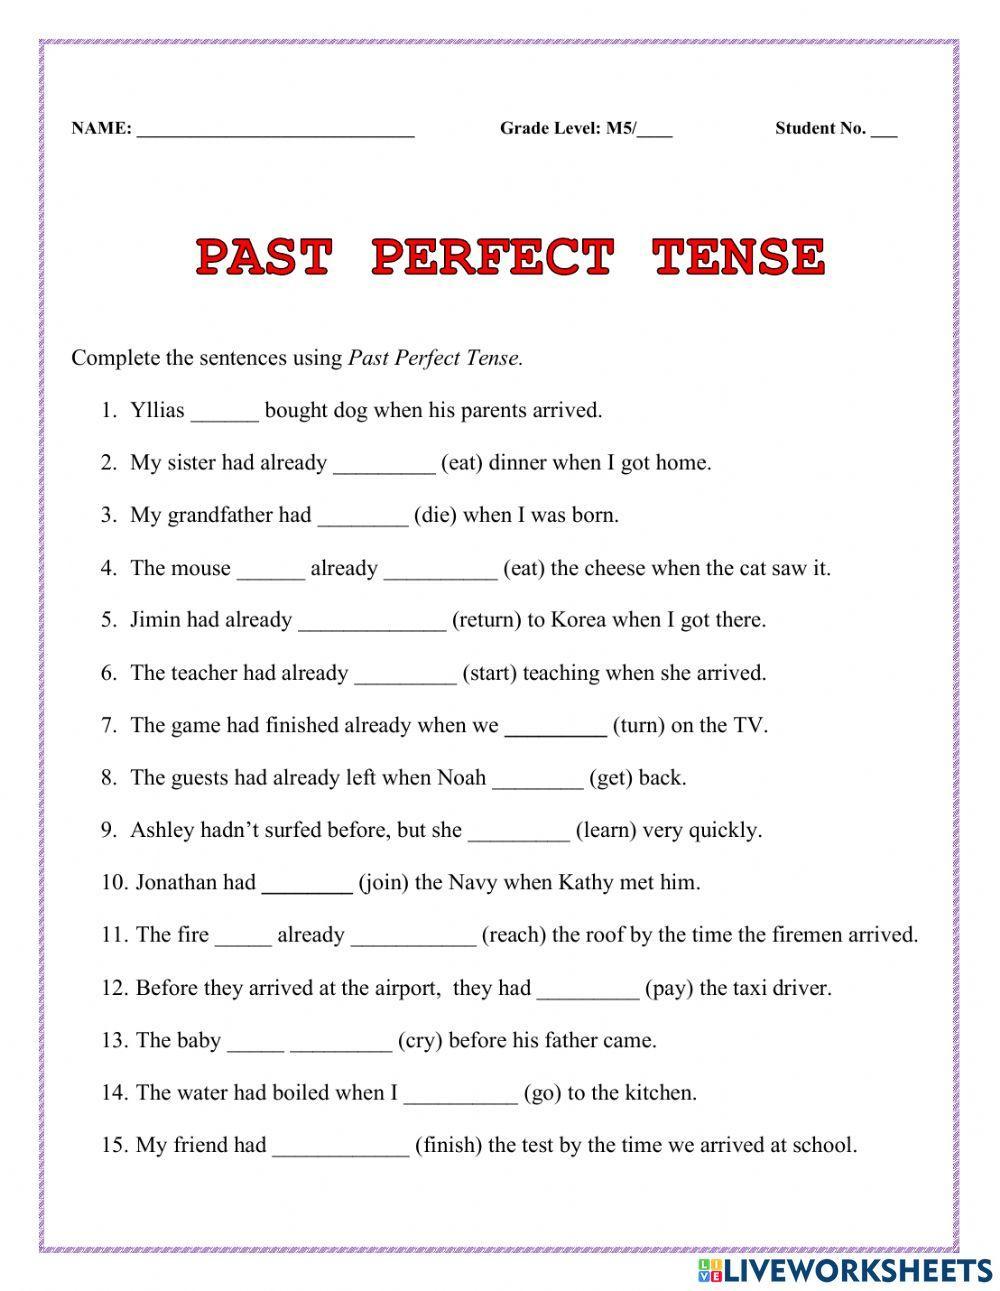 Past perfect tense vs past simple